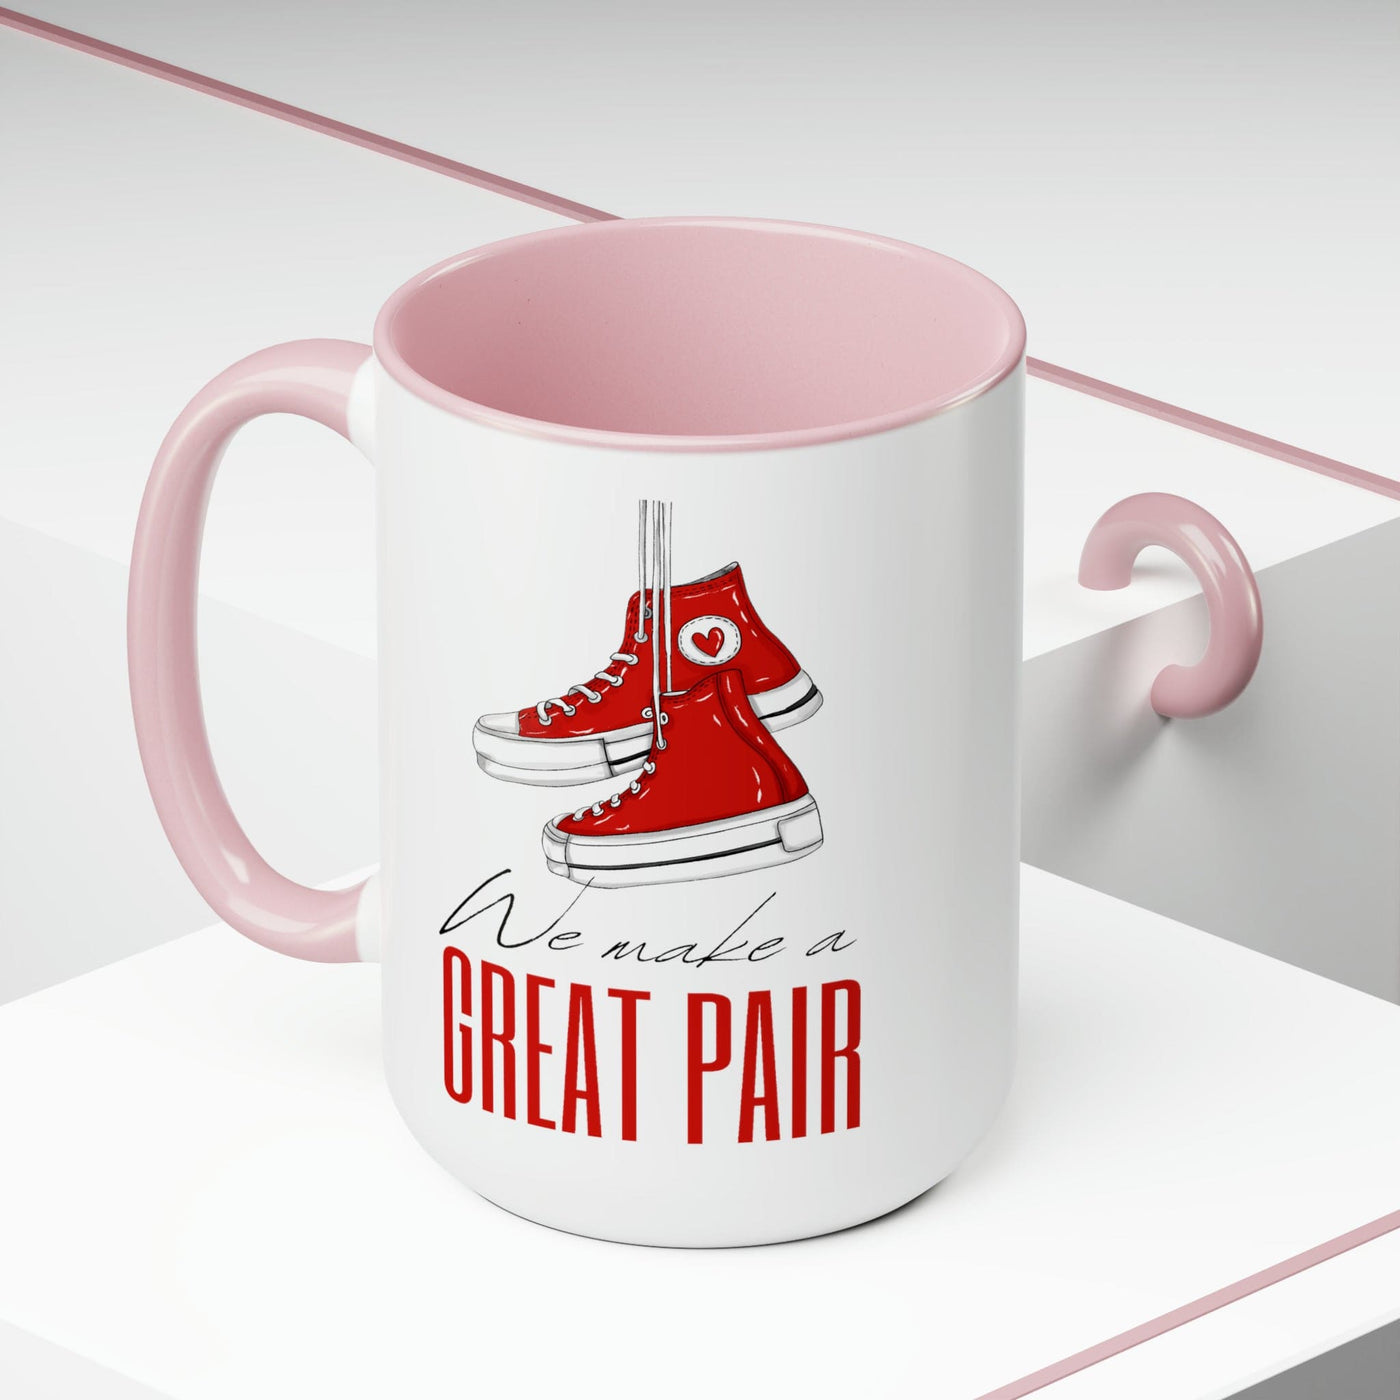 Accent Ceramic Coffee Mug 15oz - Say It Soul We Make a Great Pair Red - Mug